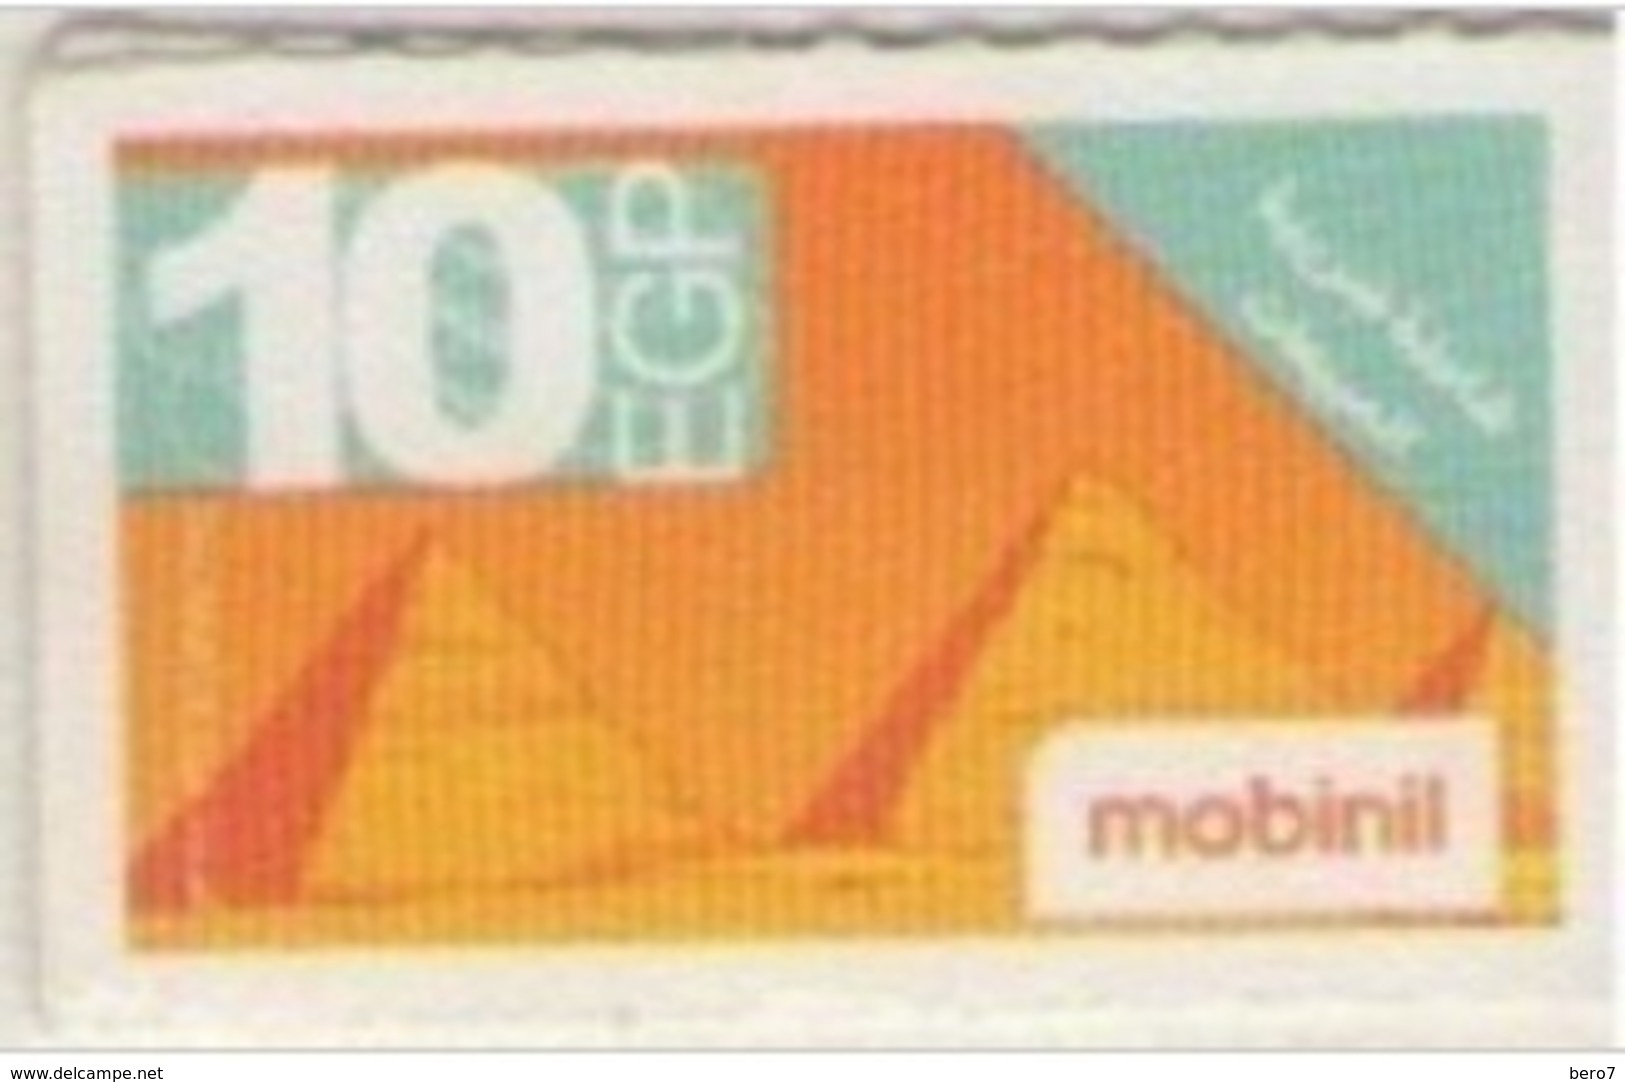 EGYPT Pyramids - MobiNil Prepaid Card 10 L.E, [USED] (Egypte) (Egitto) (Ägypten) (Egipto) (Egypten) - Egitto